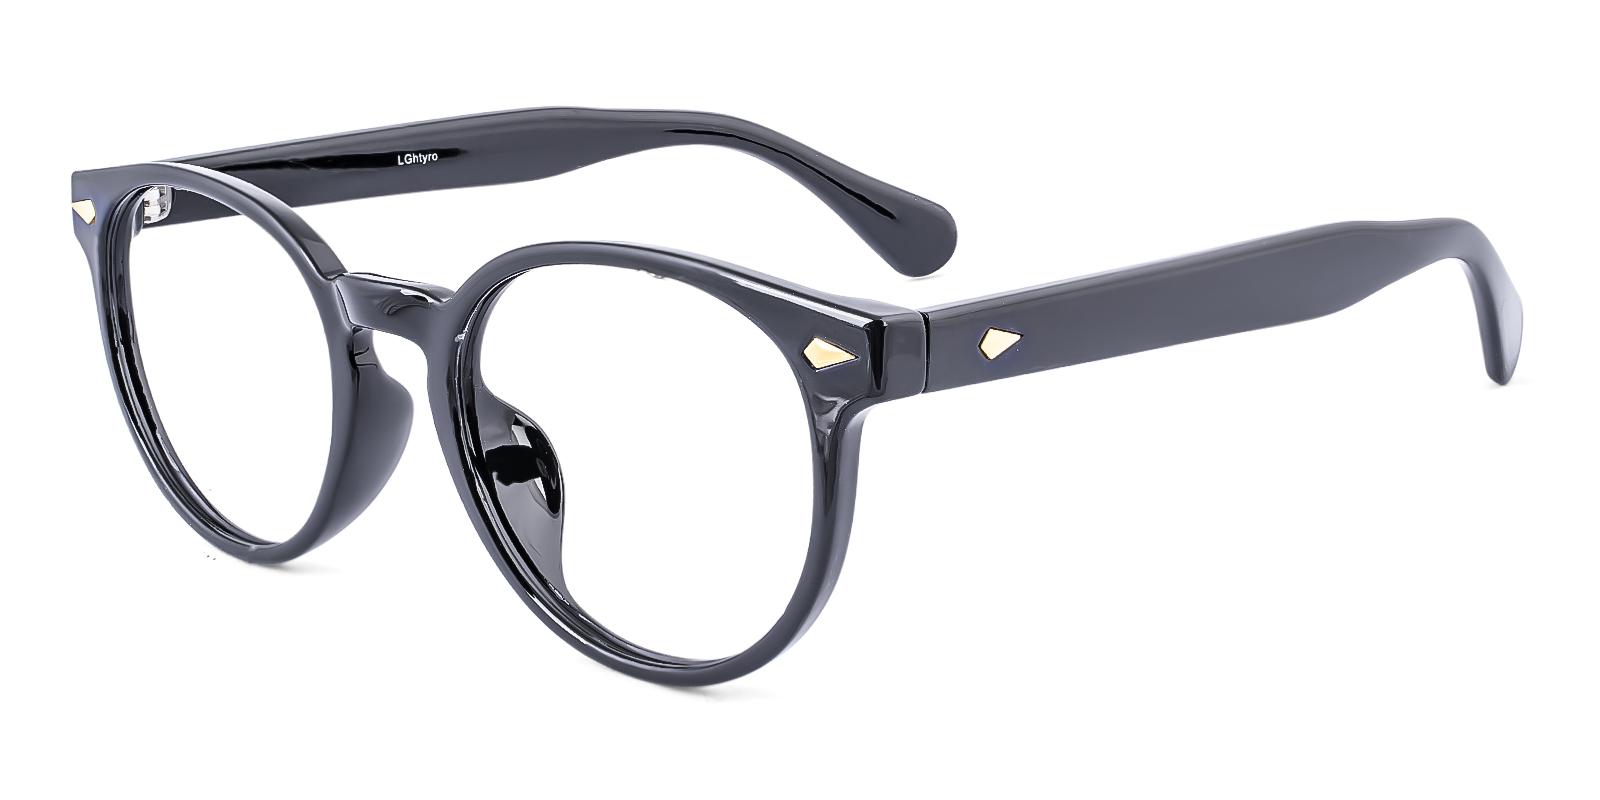 Hismost Black Plastic Eyeglasses , UniversalBridgeFit Frames from ABBE Glasses